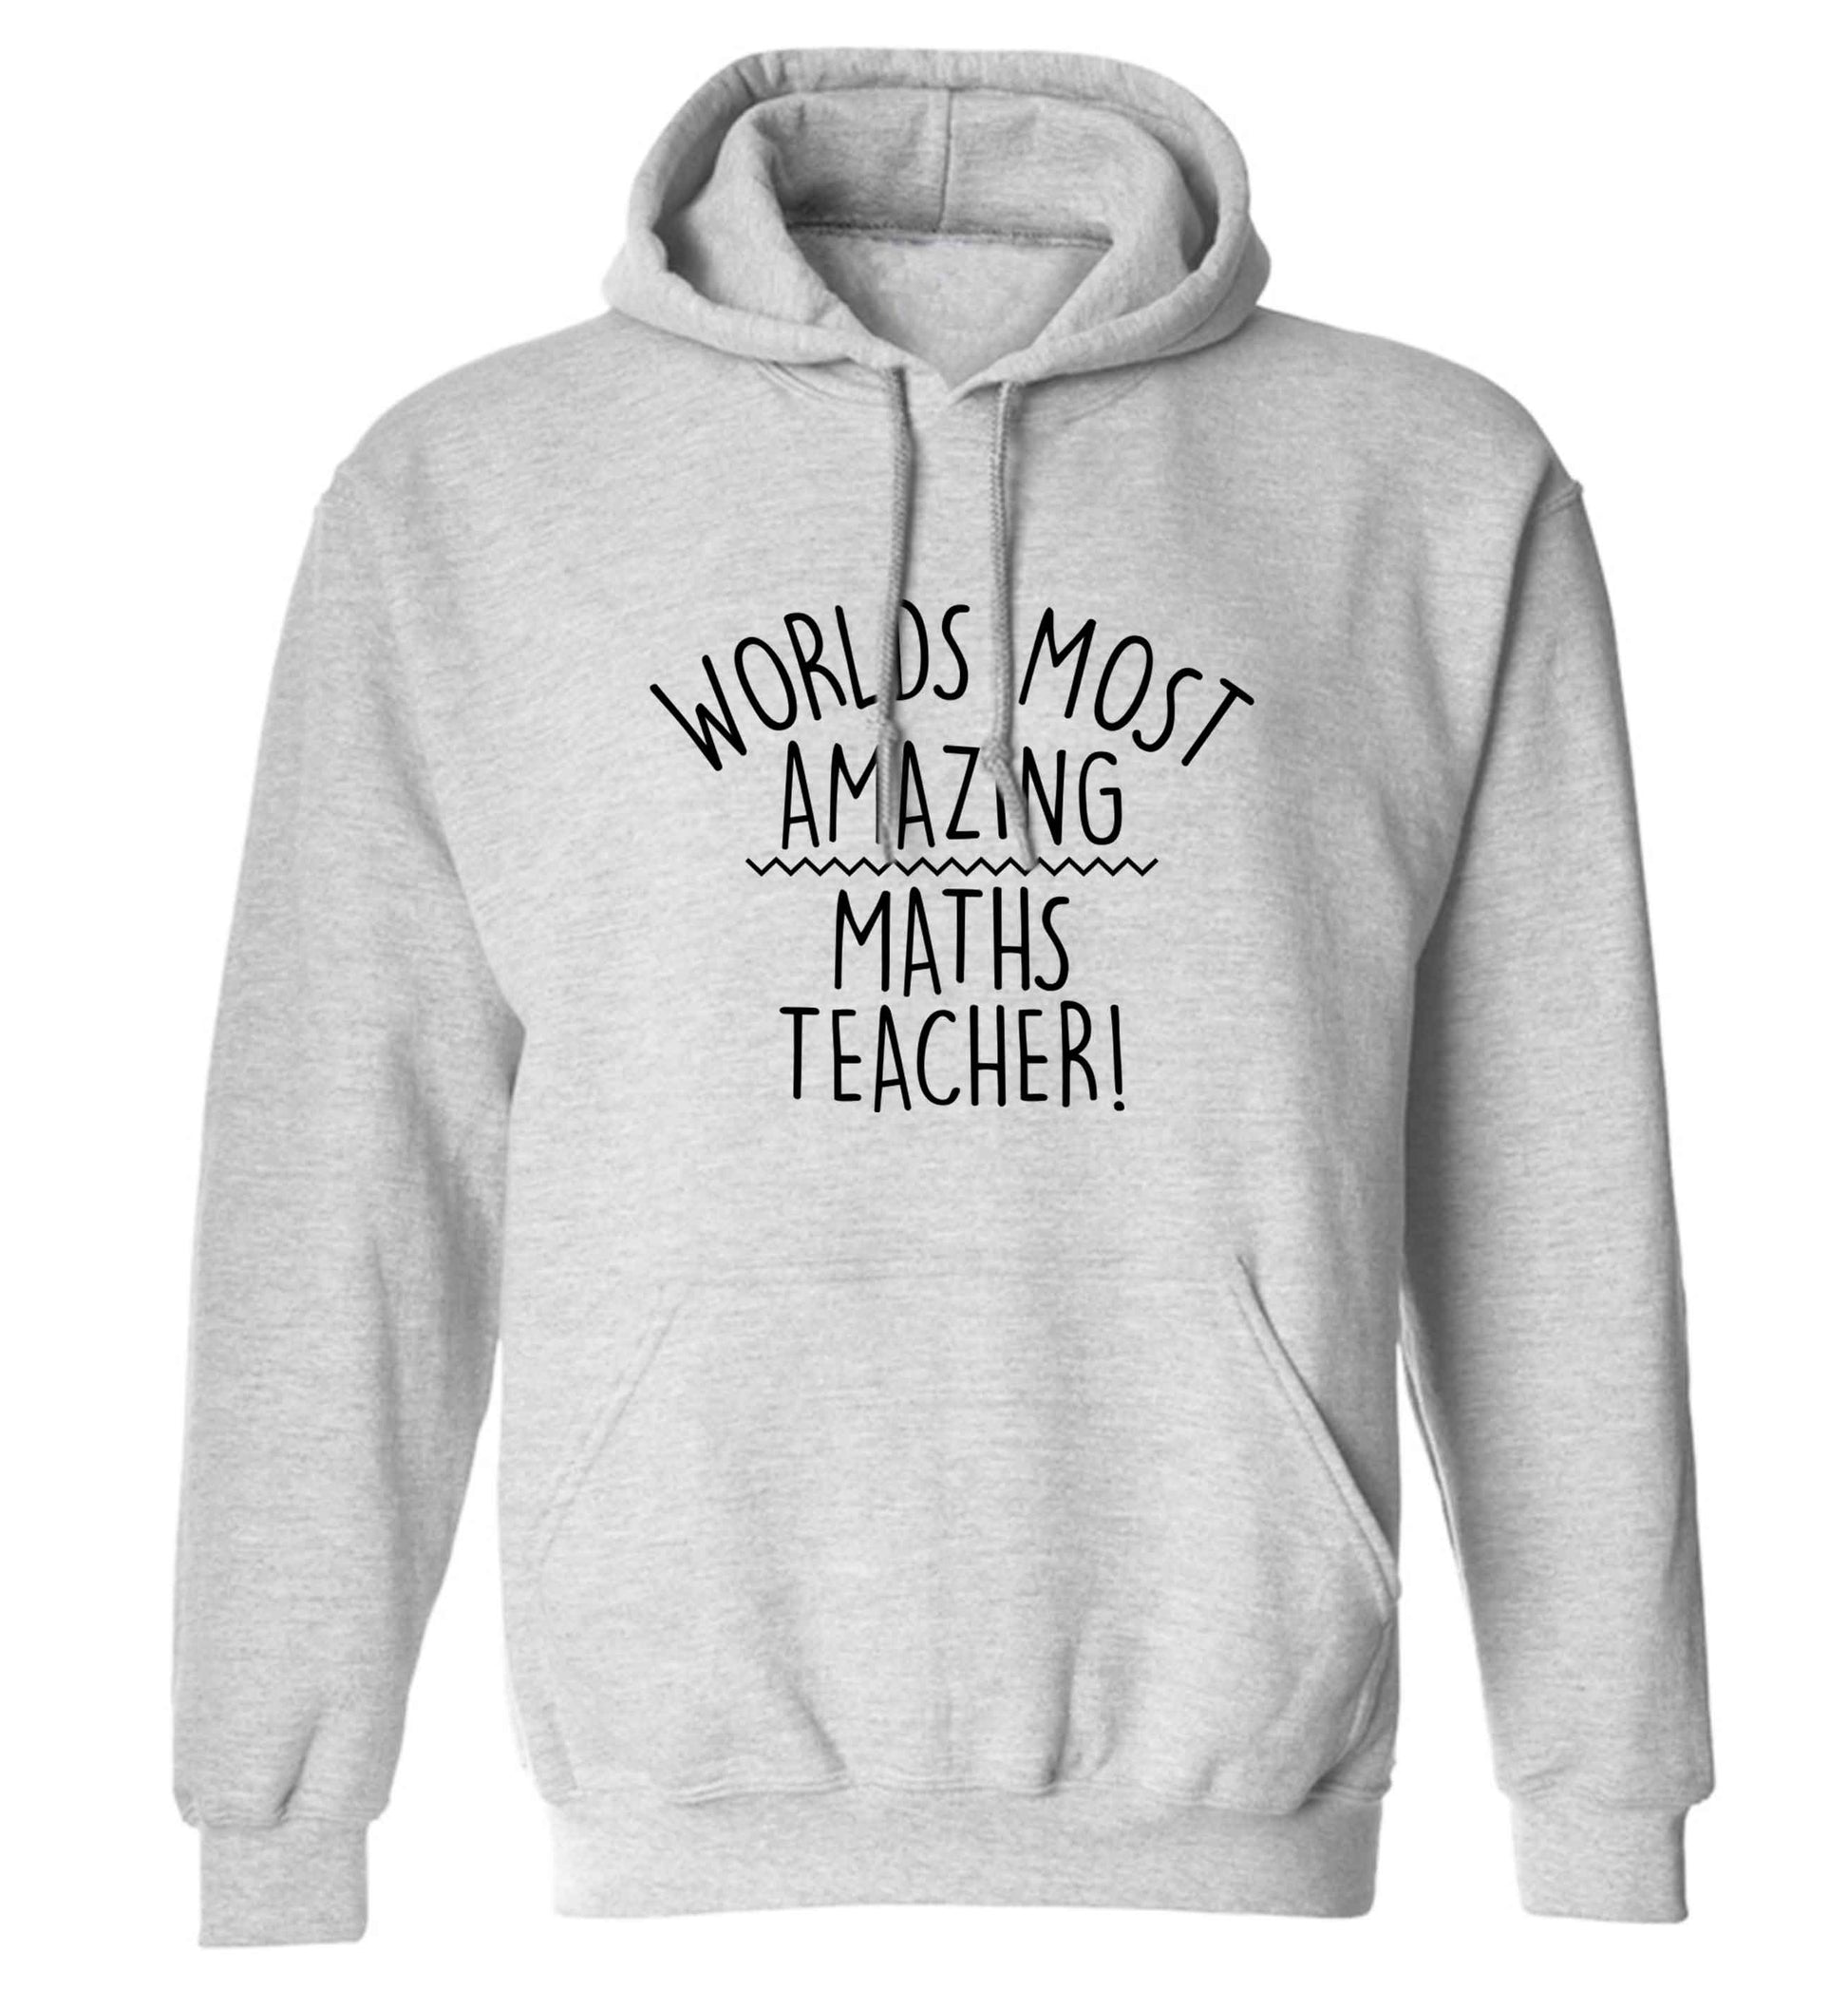 Worlds most amazing maths teacher adults unisex grey hoodie 2XL